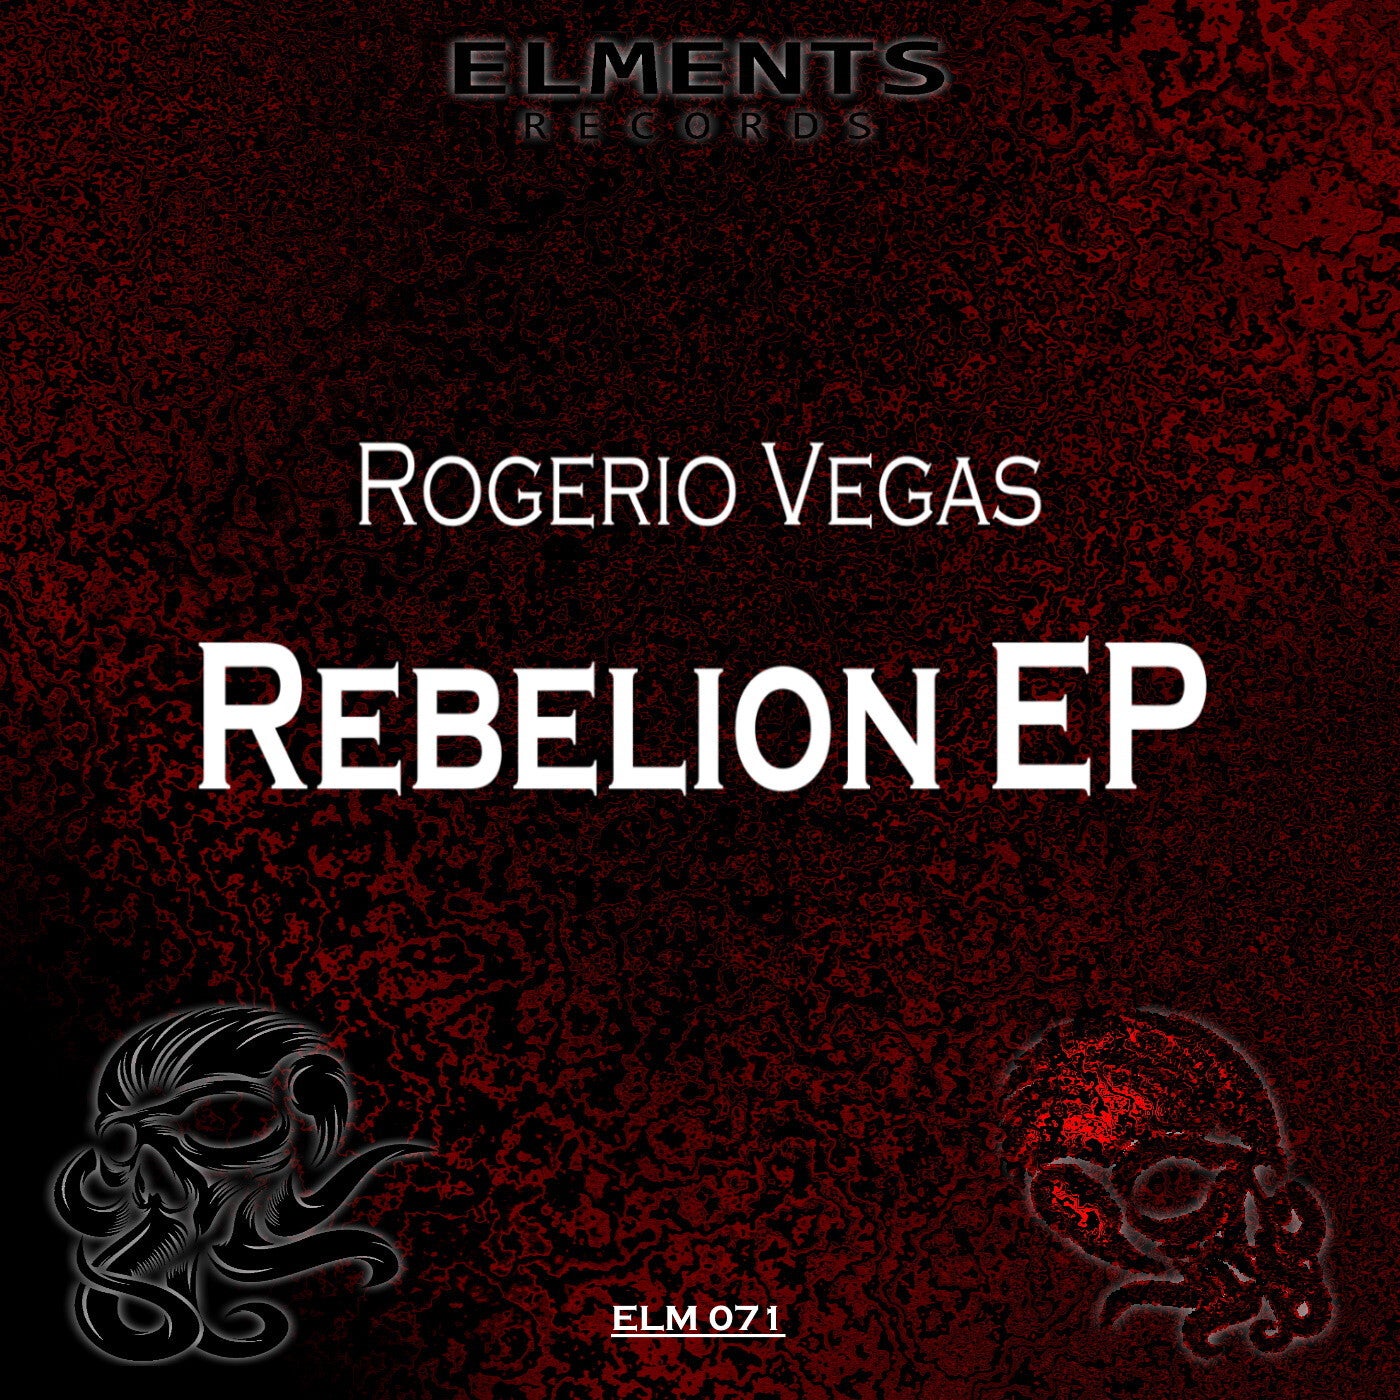 Rebelion EP